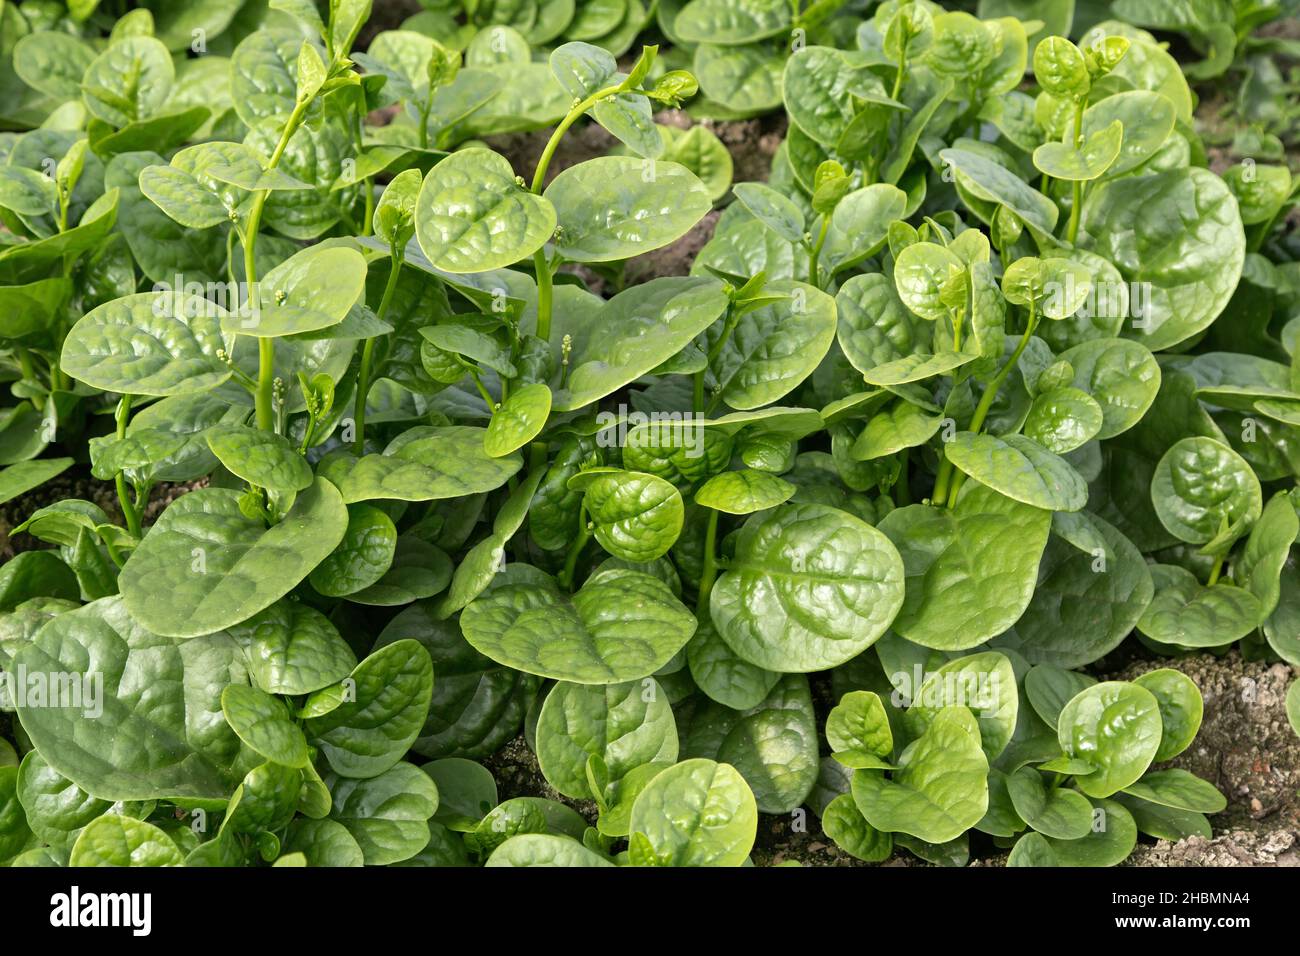 RAU Mong toi, Malabar Spinach 'Basella Alba' en serre, légume asiatique. Banque D'Images